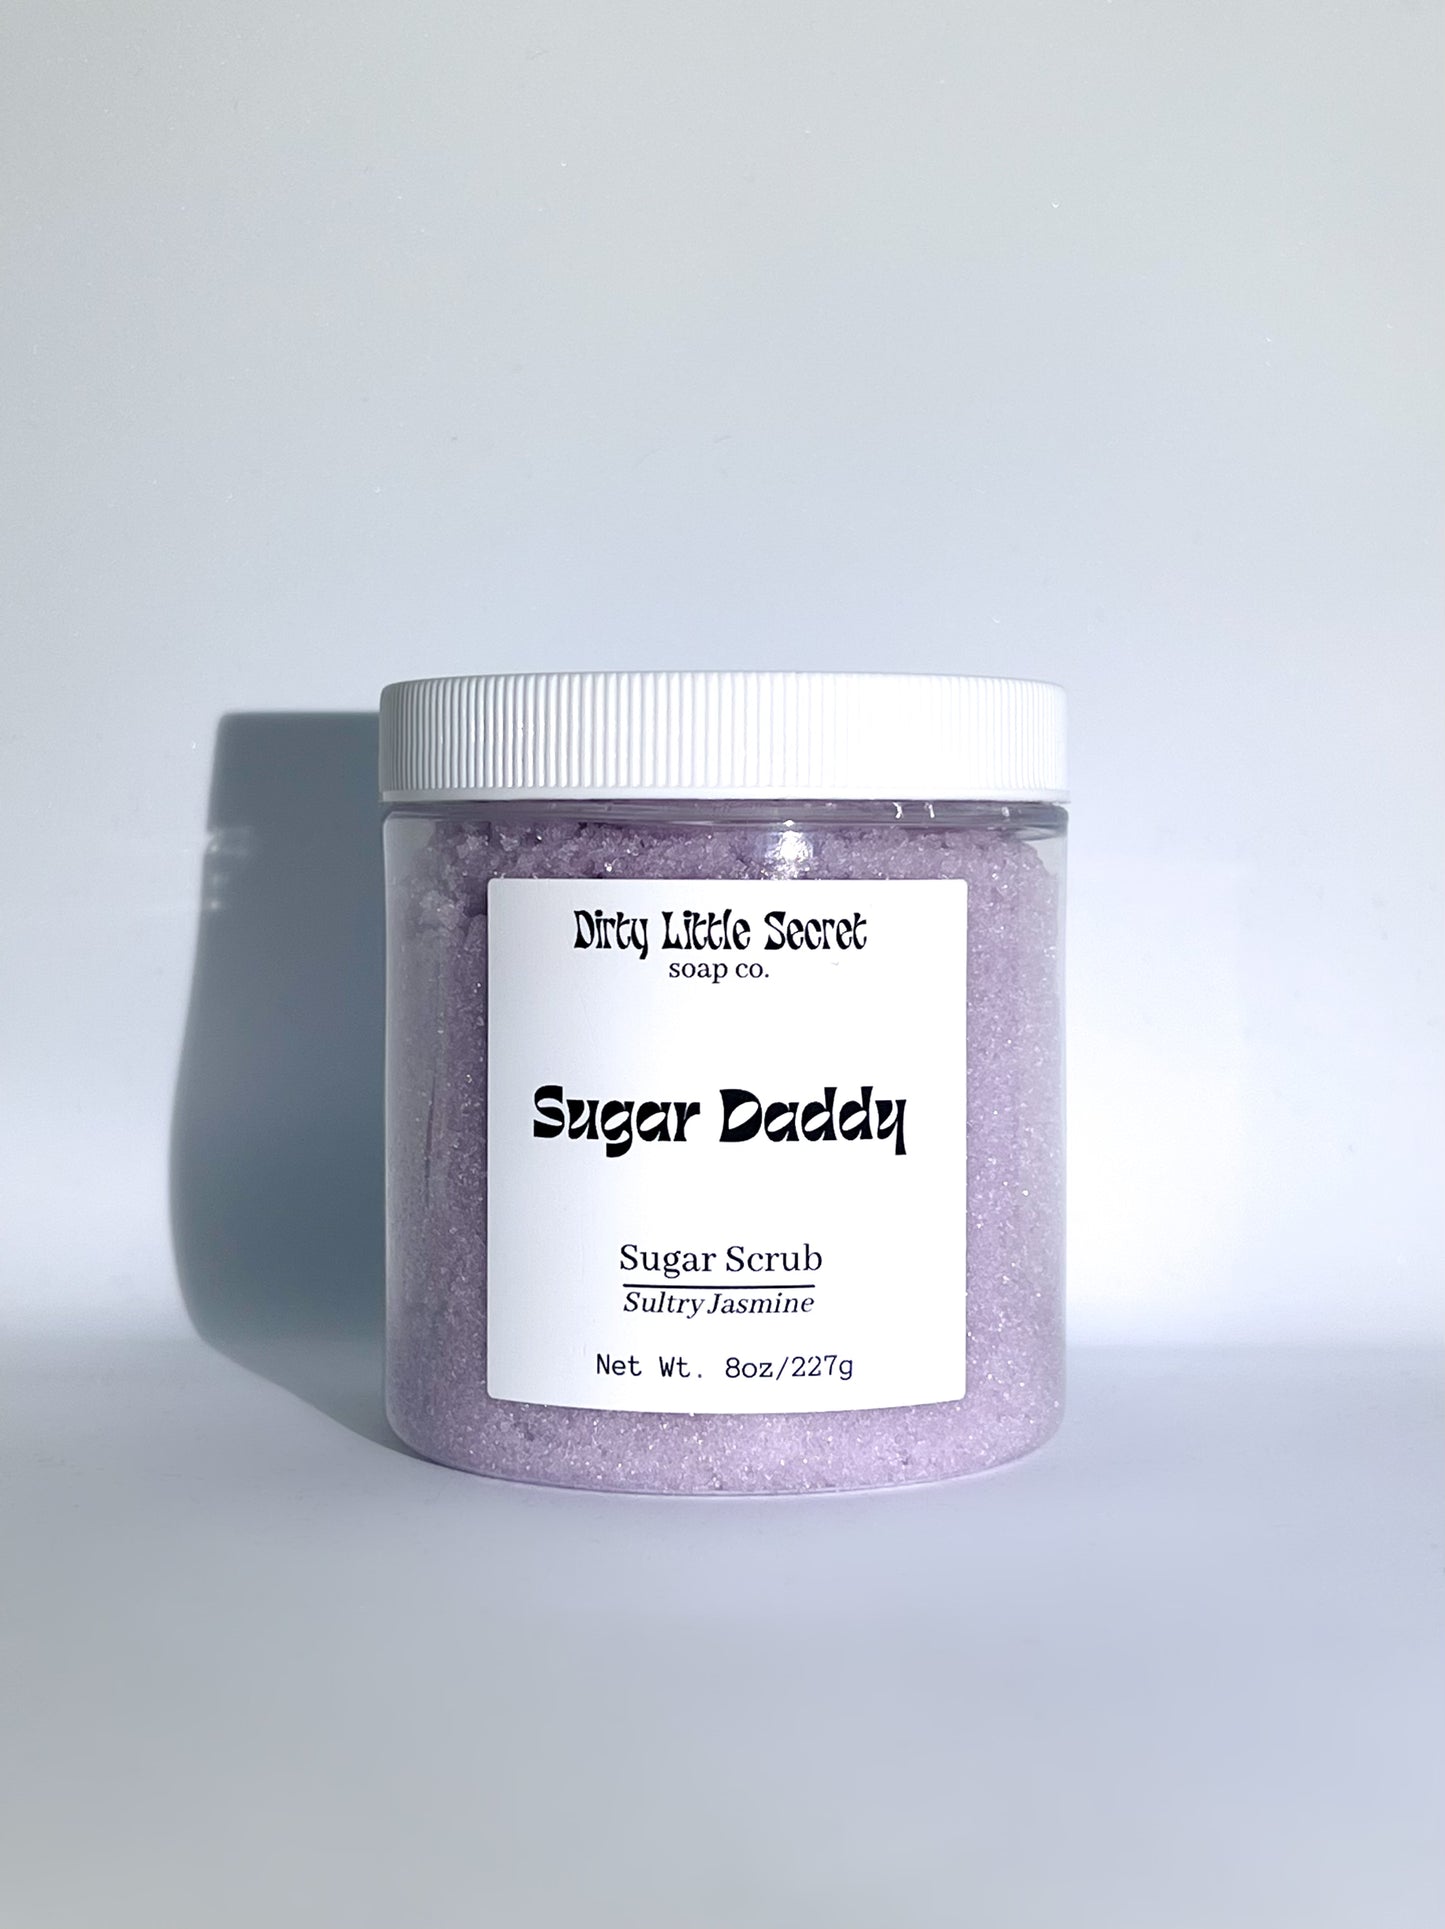 Sultry Jasmine - Sugar Daddy